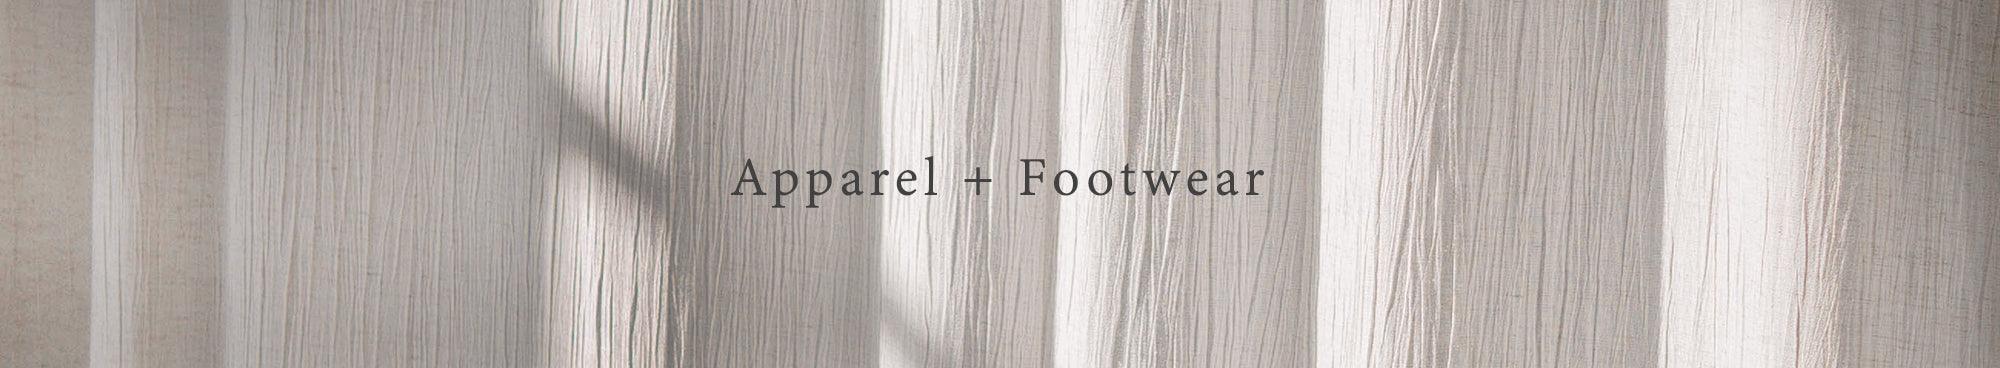 Apparel + Footwear